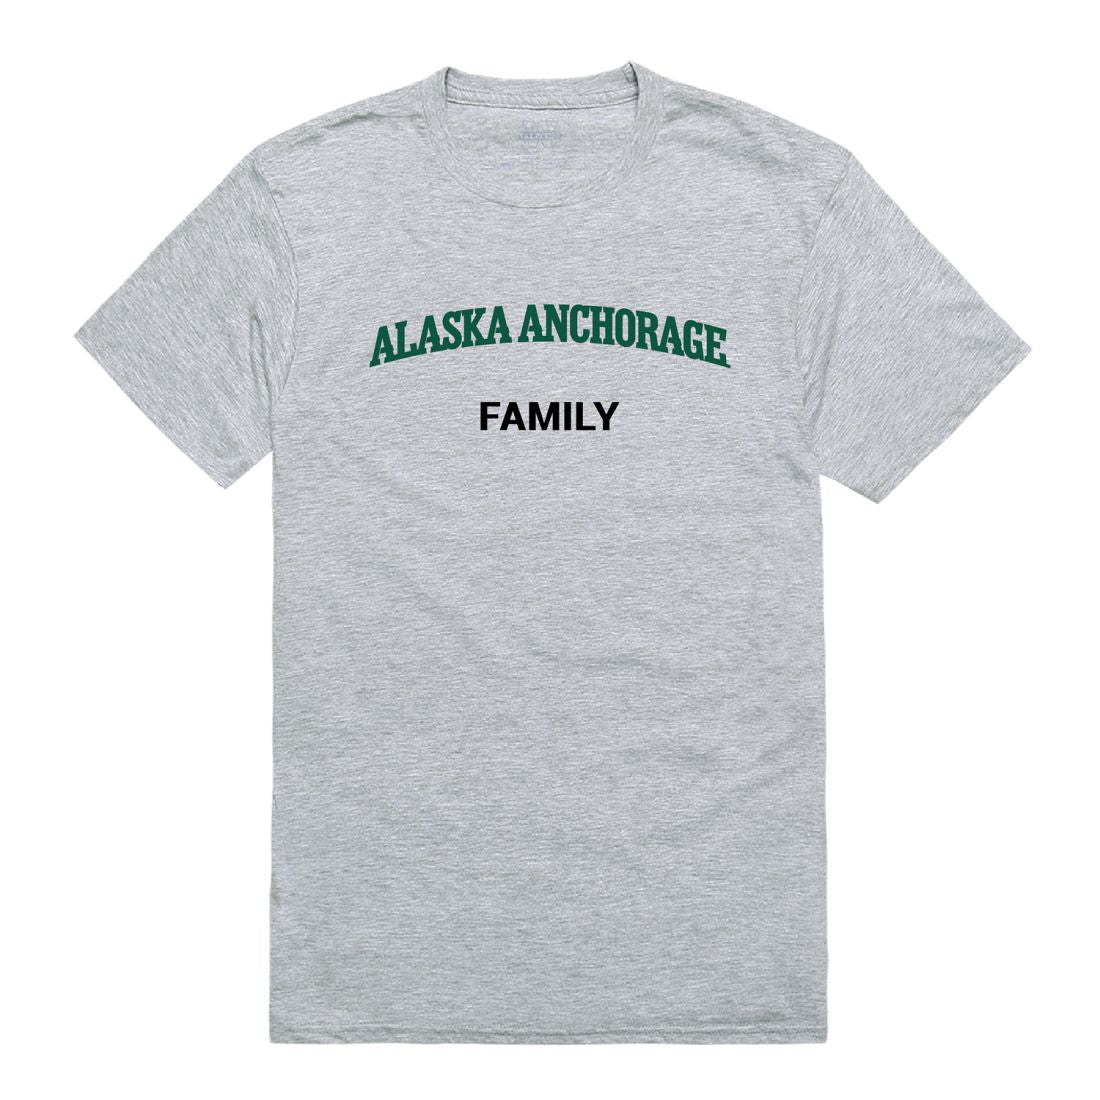 UAA University of Alaska Anchorage Sea Wolves Family T-Shirt